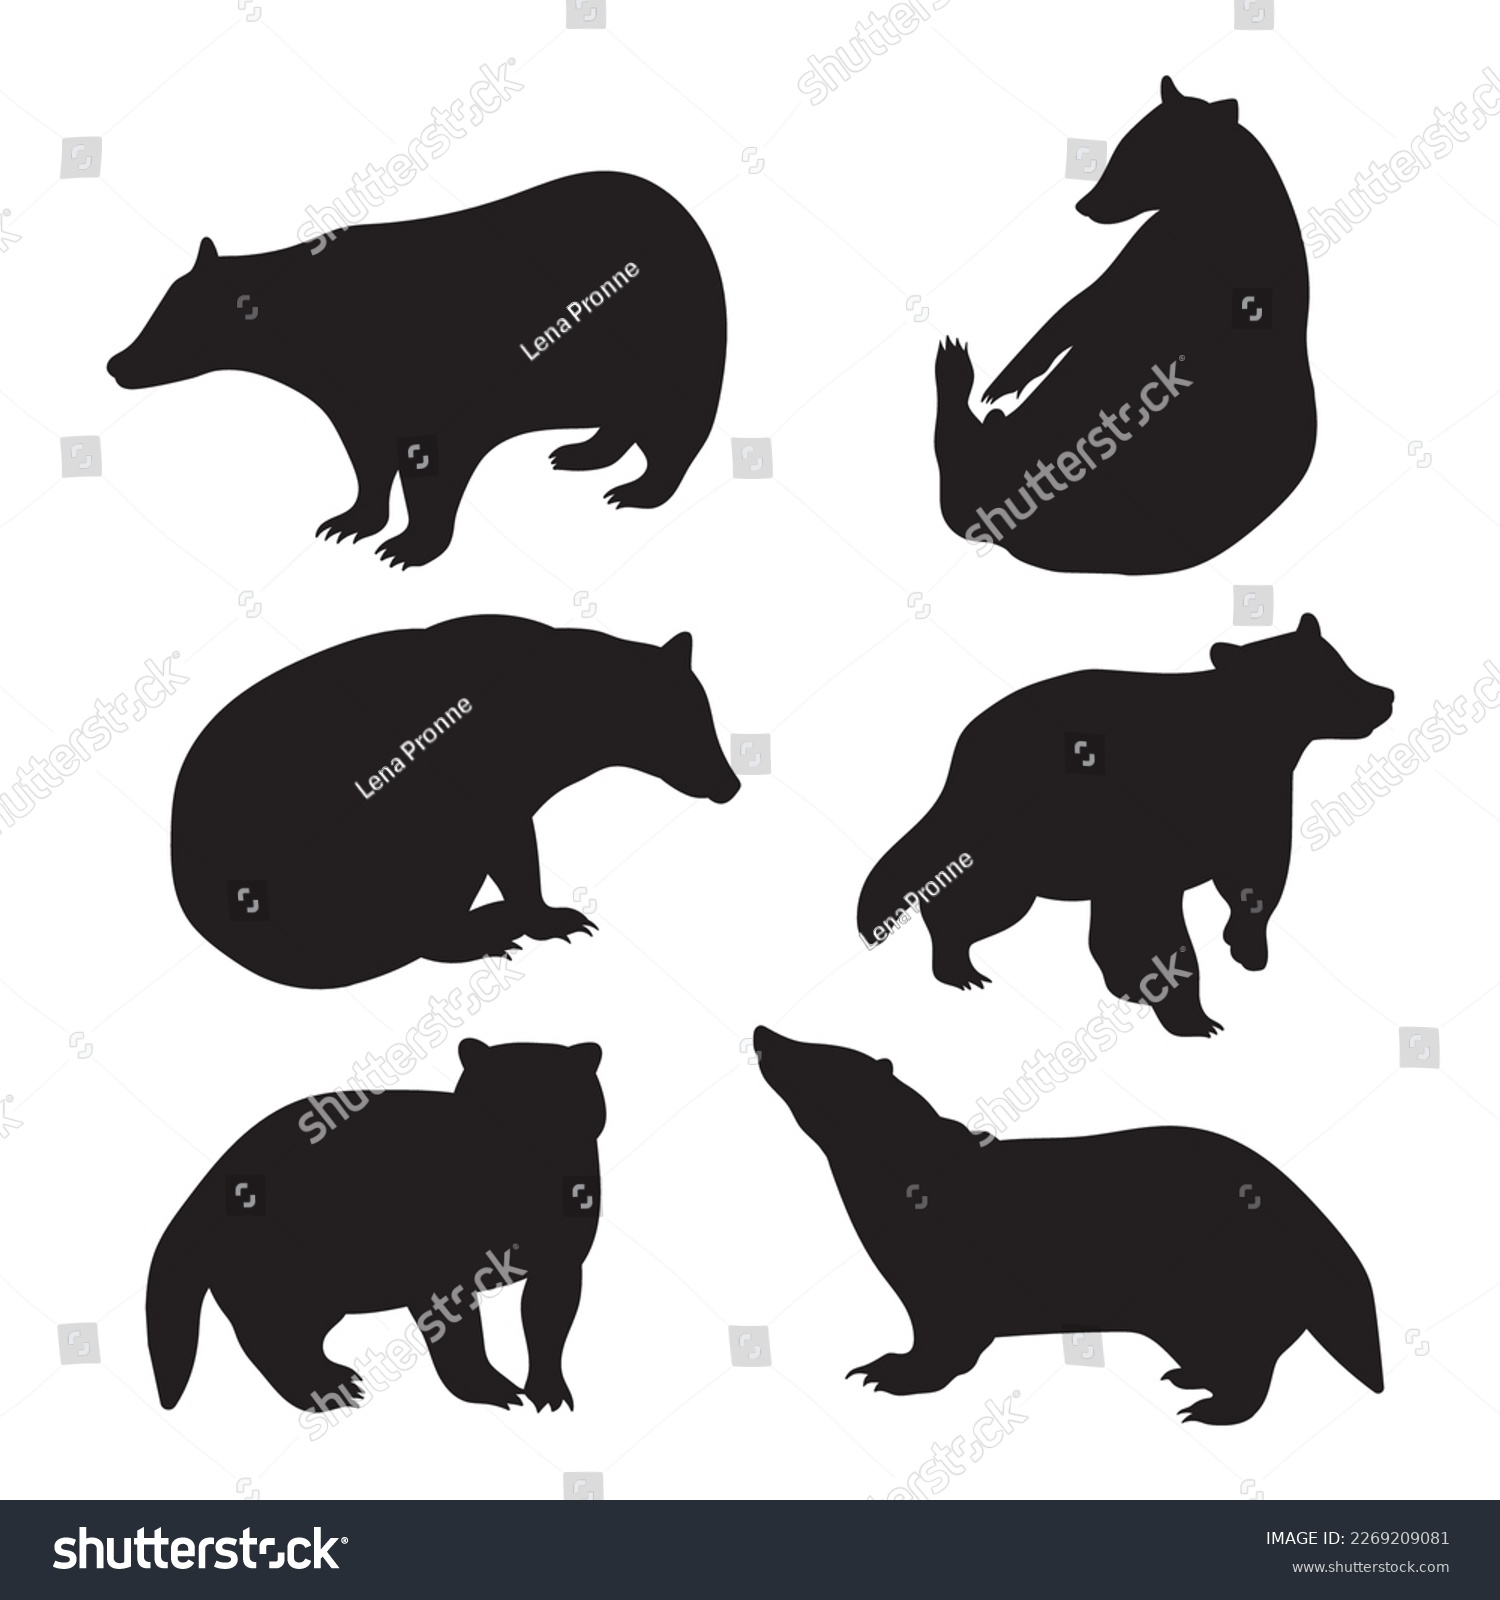 SVG of Badger set silhouette animals, stencil templates for design svg